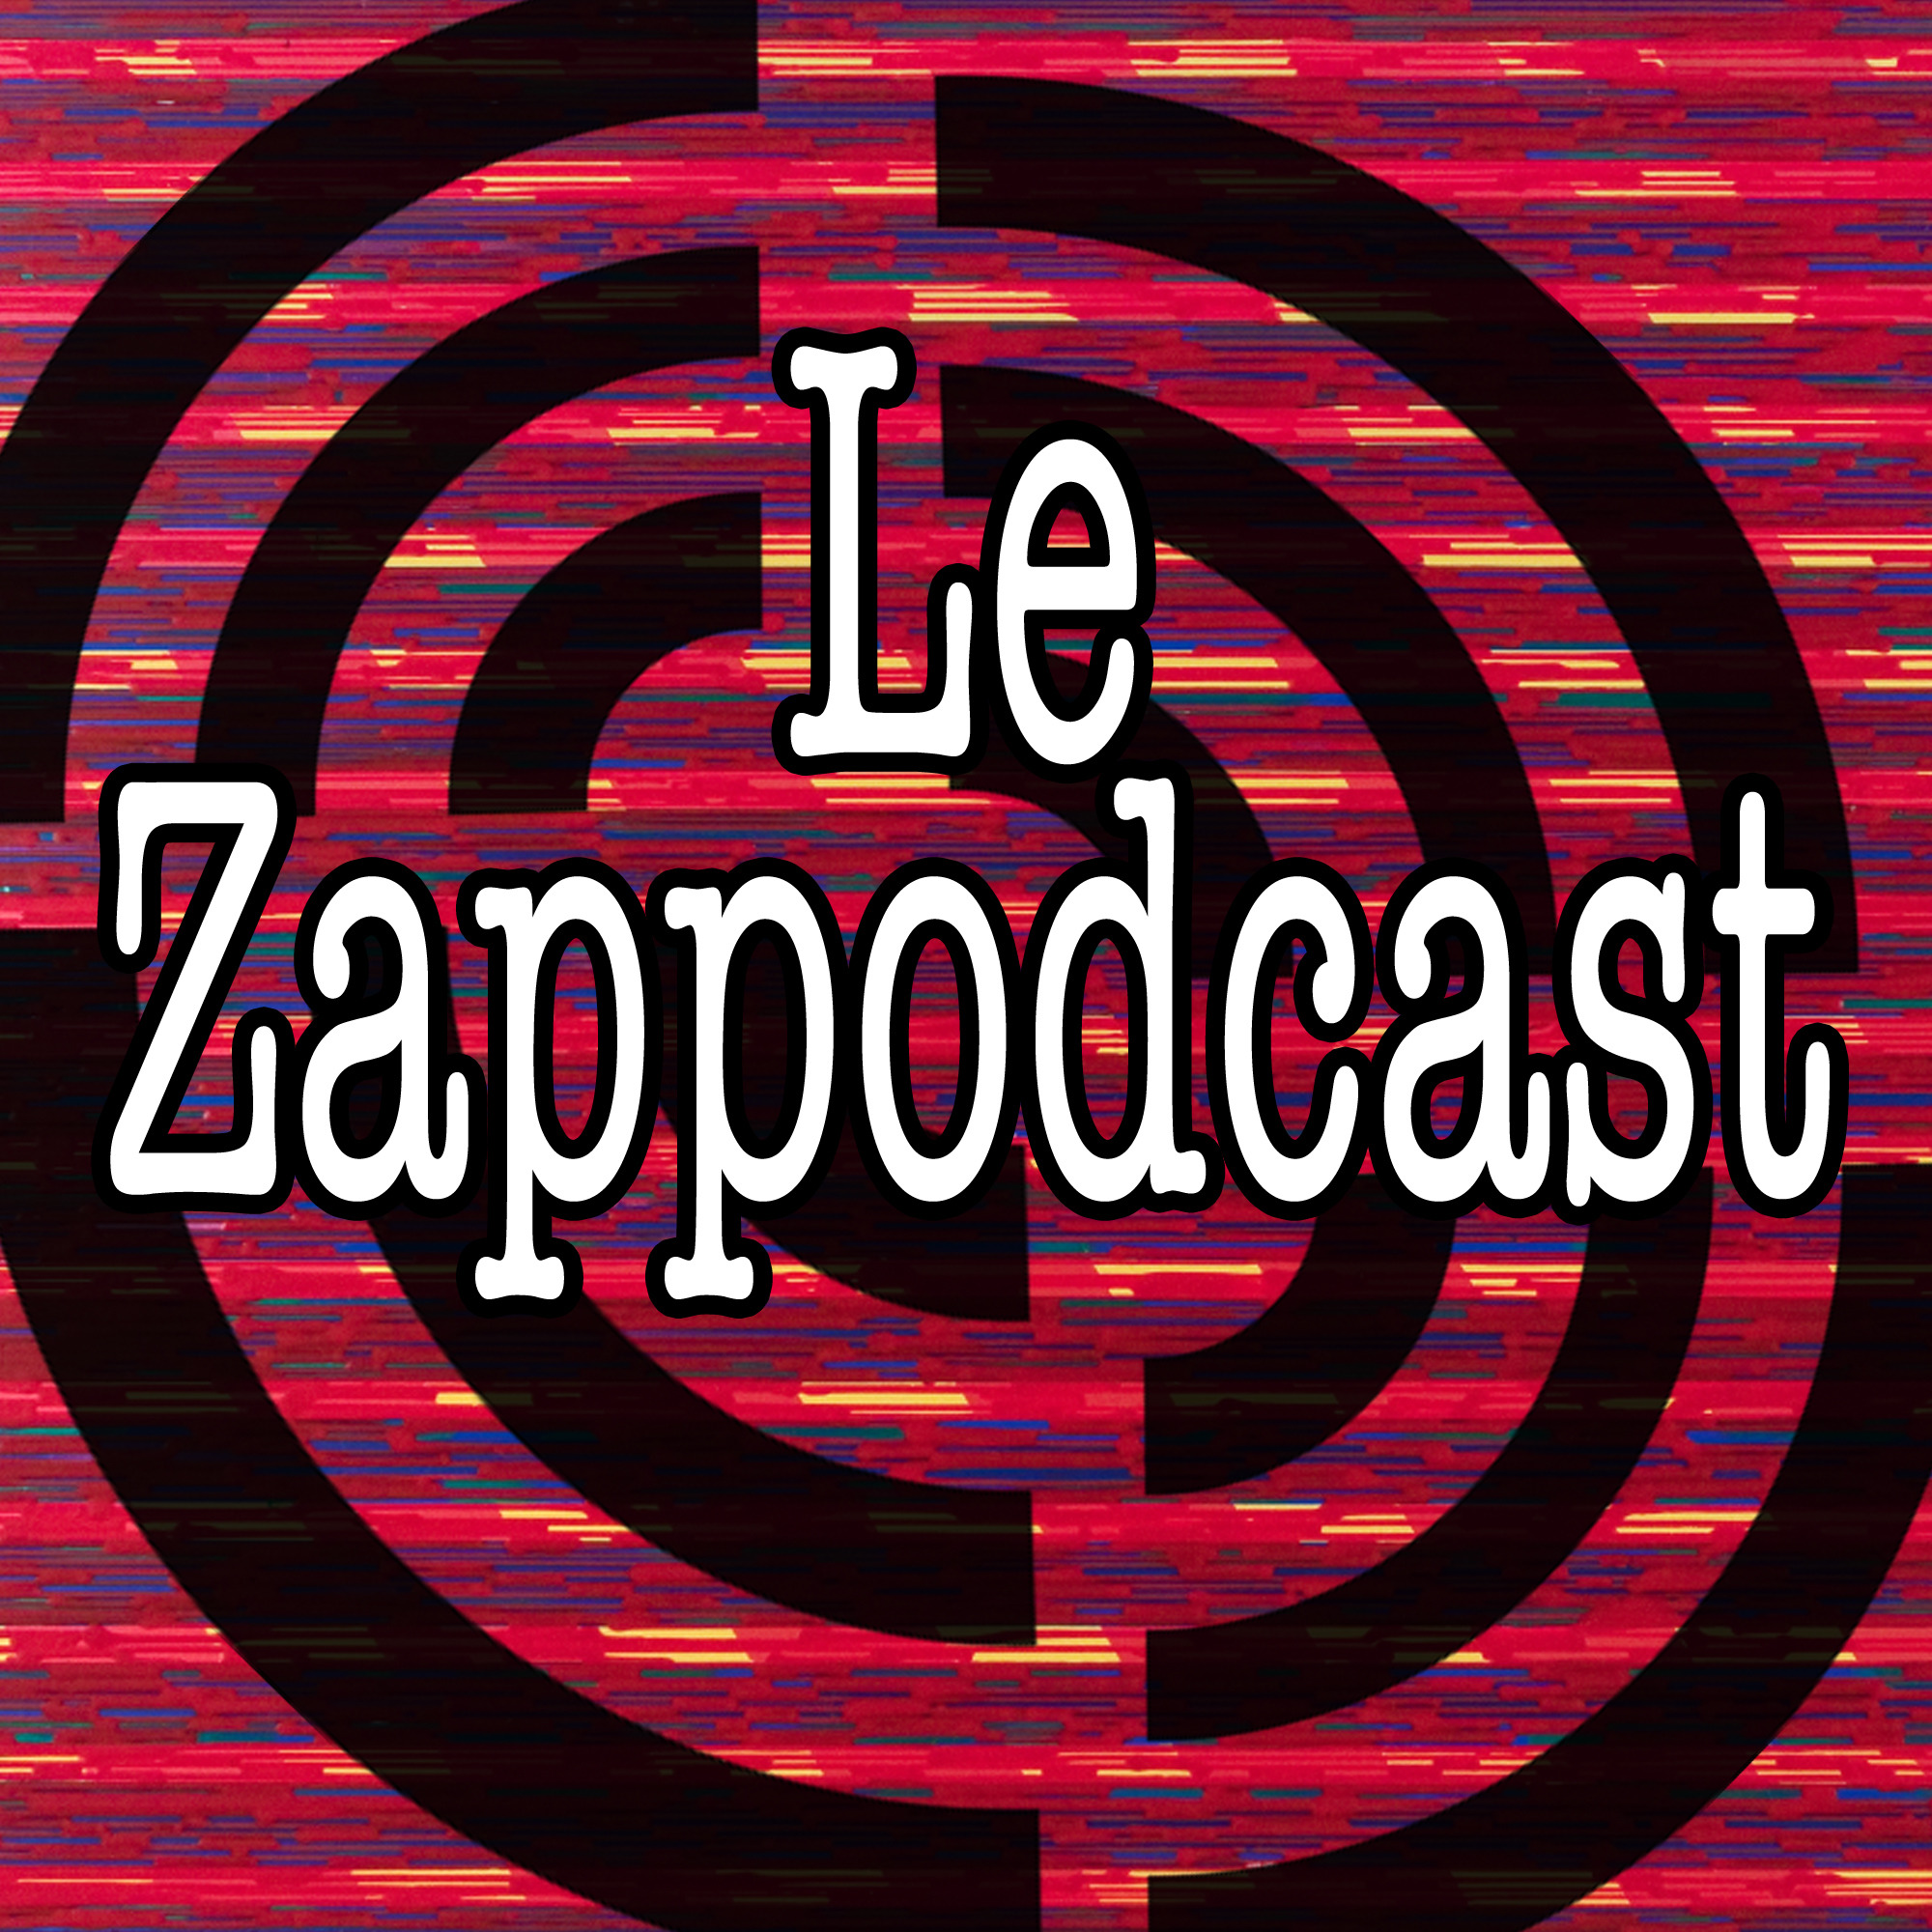 zappodcast #77